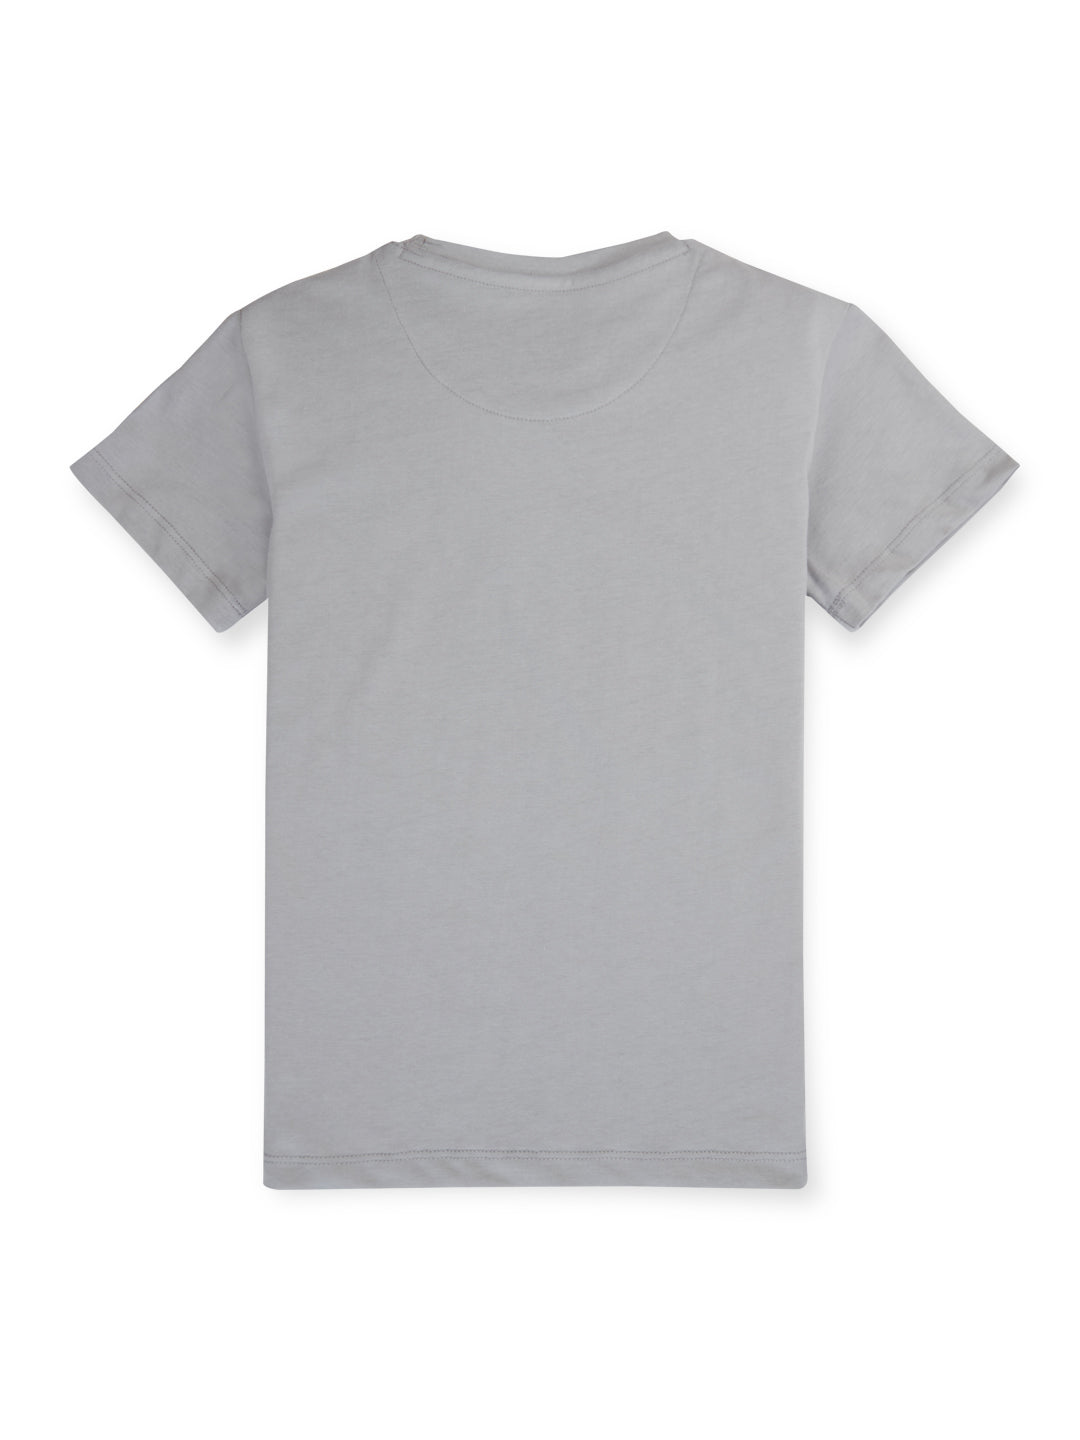 Boys Grey Graphic Print Cotton T-Shirt Half Sleeves